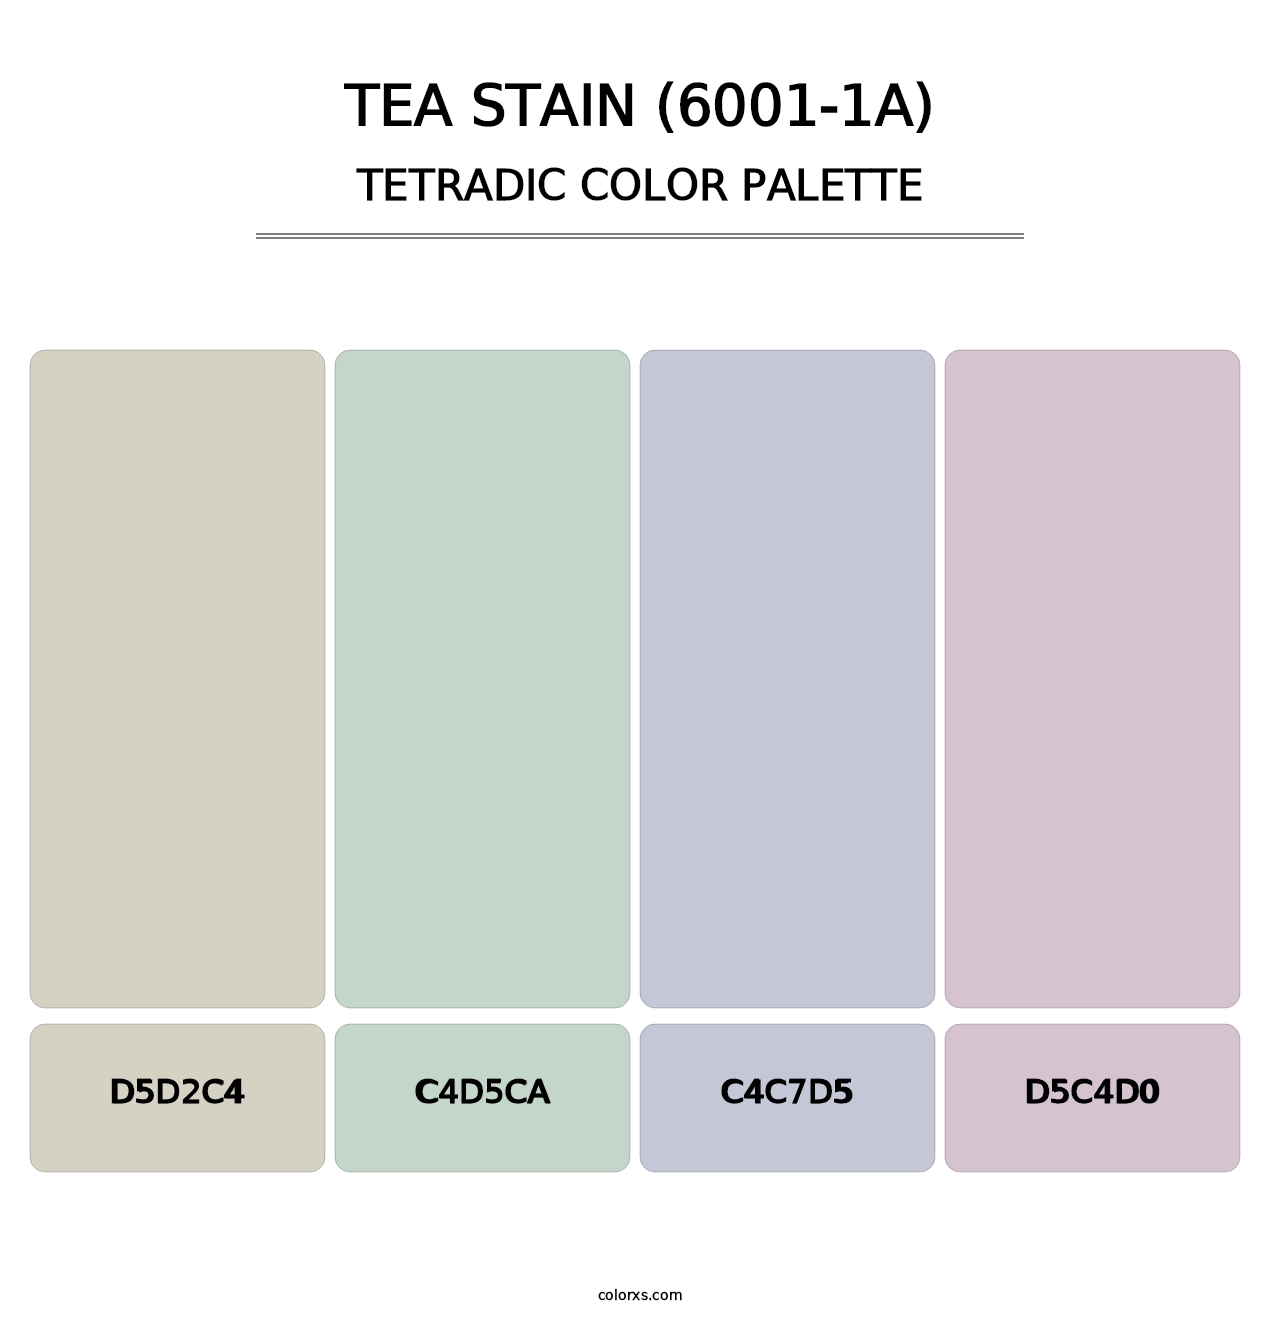 Tea Stain (6001-1A) - Tetradic Color Palette